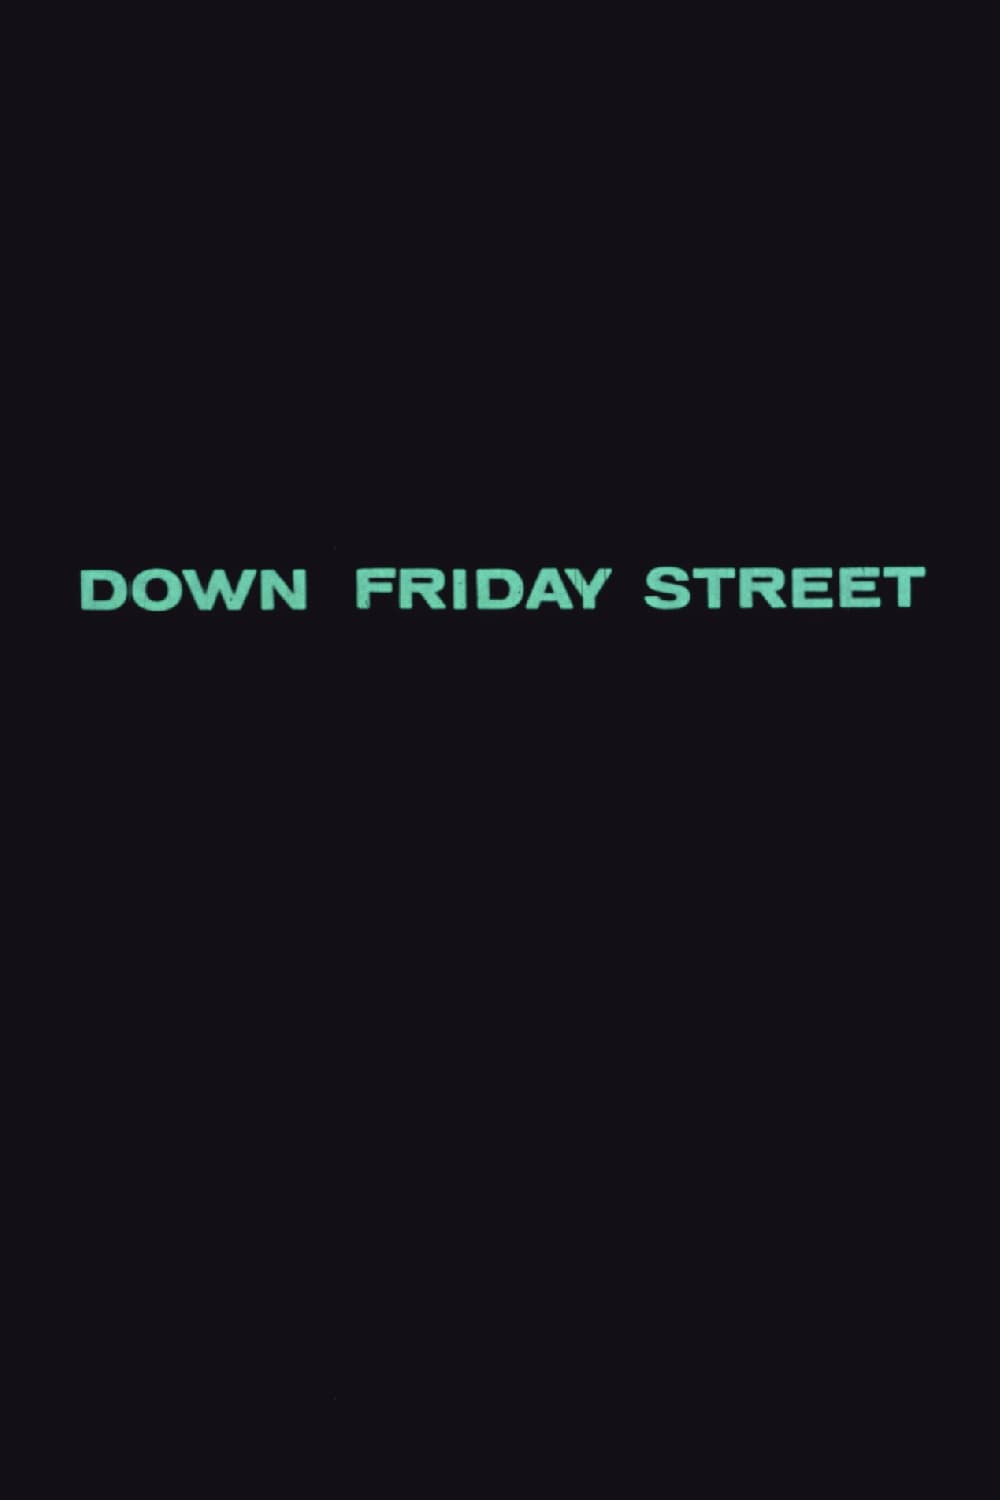 Down Friday Street